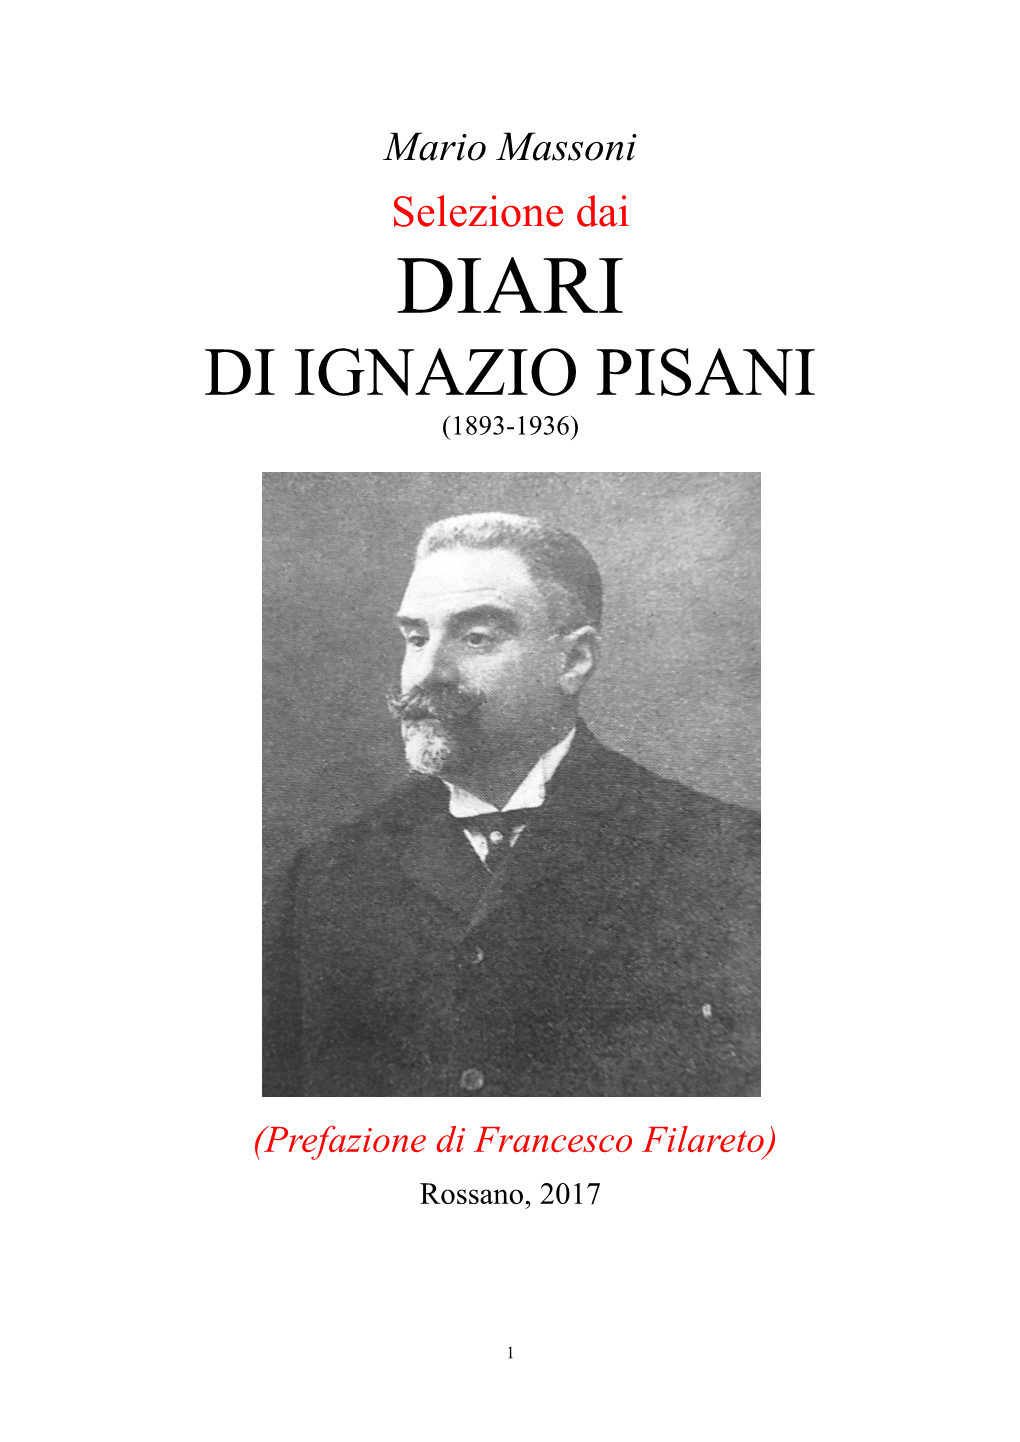 Di Ignazio Pisani (1893-1936)